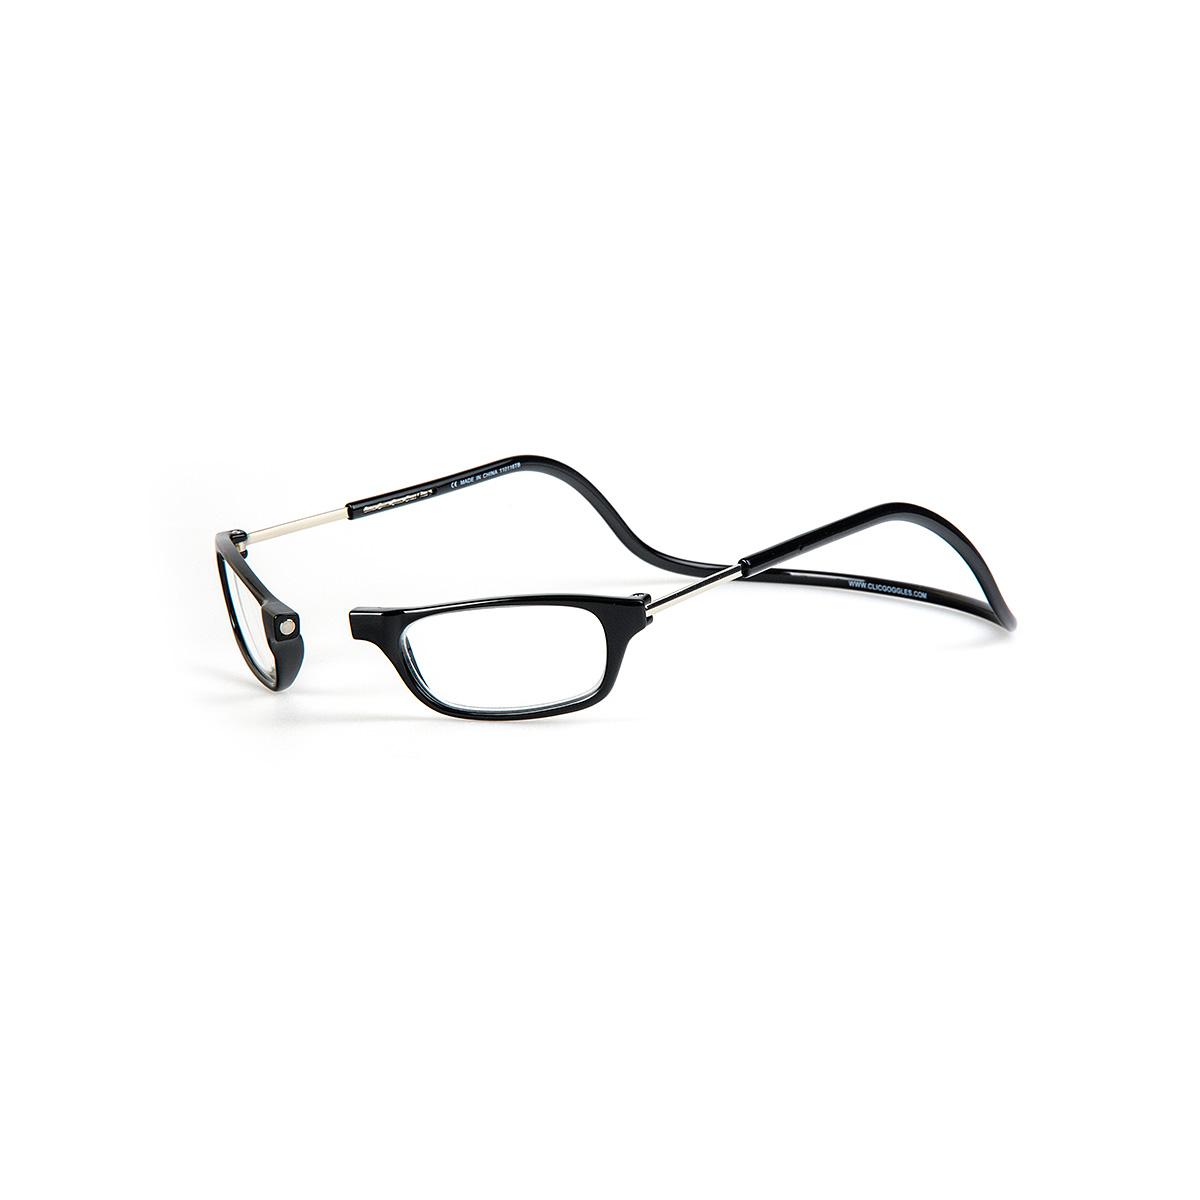 Clic Reading Glasses - Black